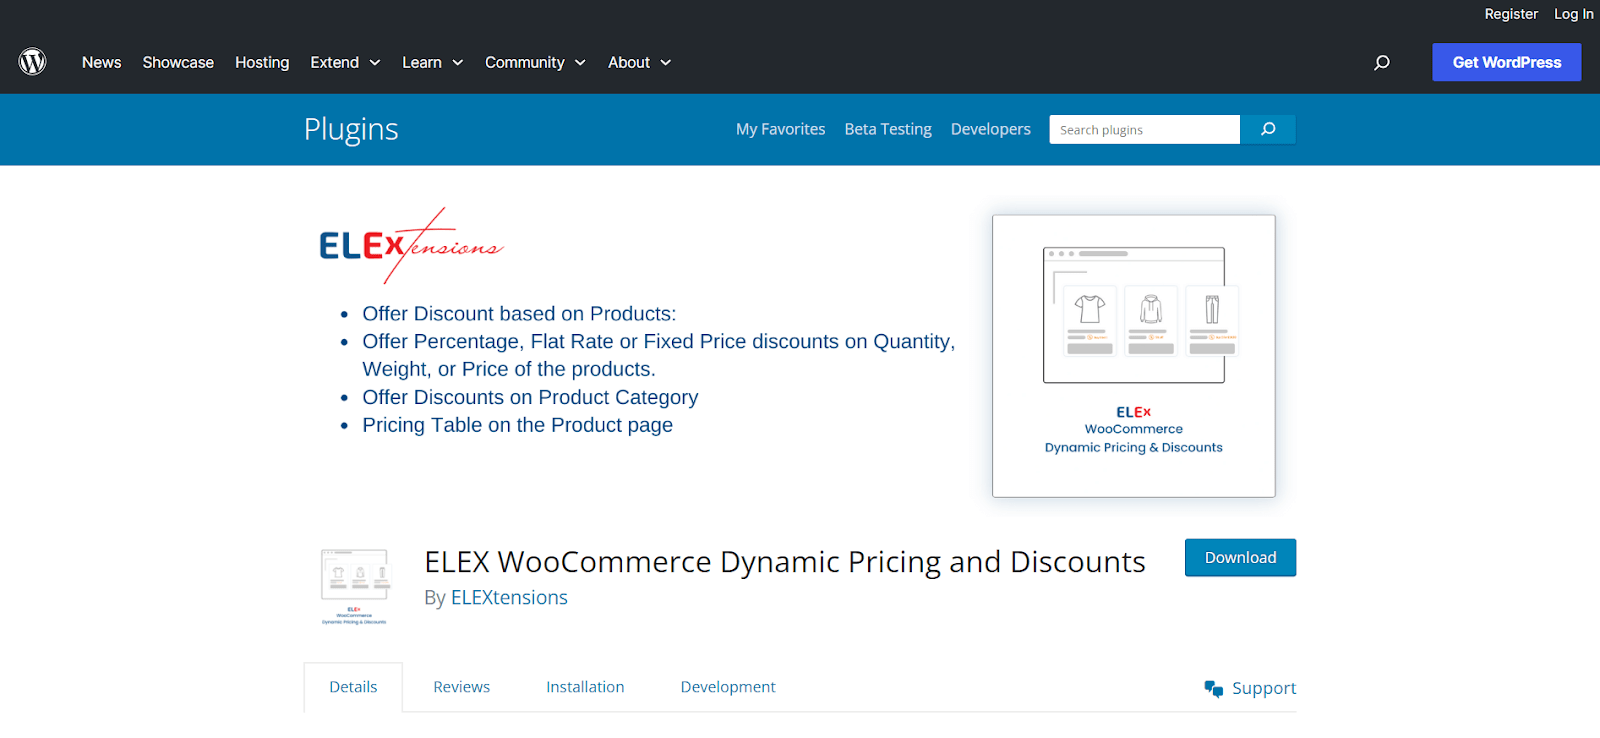 ELEX WooCommerce Dynamic Pricing and Discounts plugin